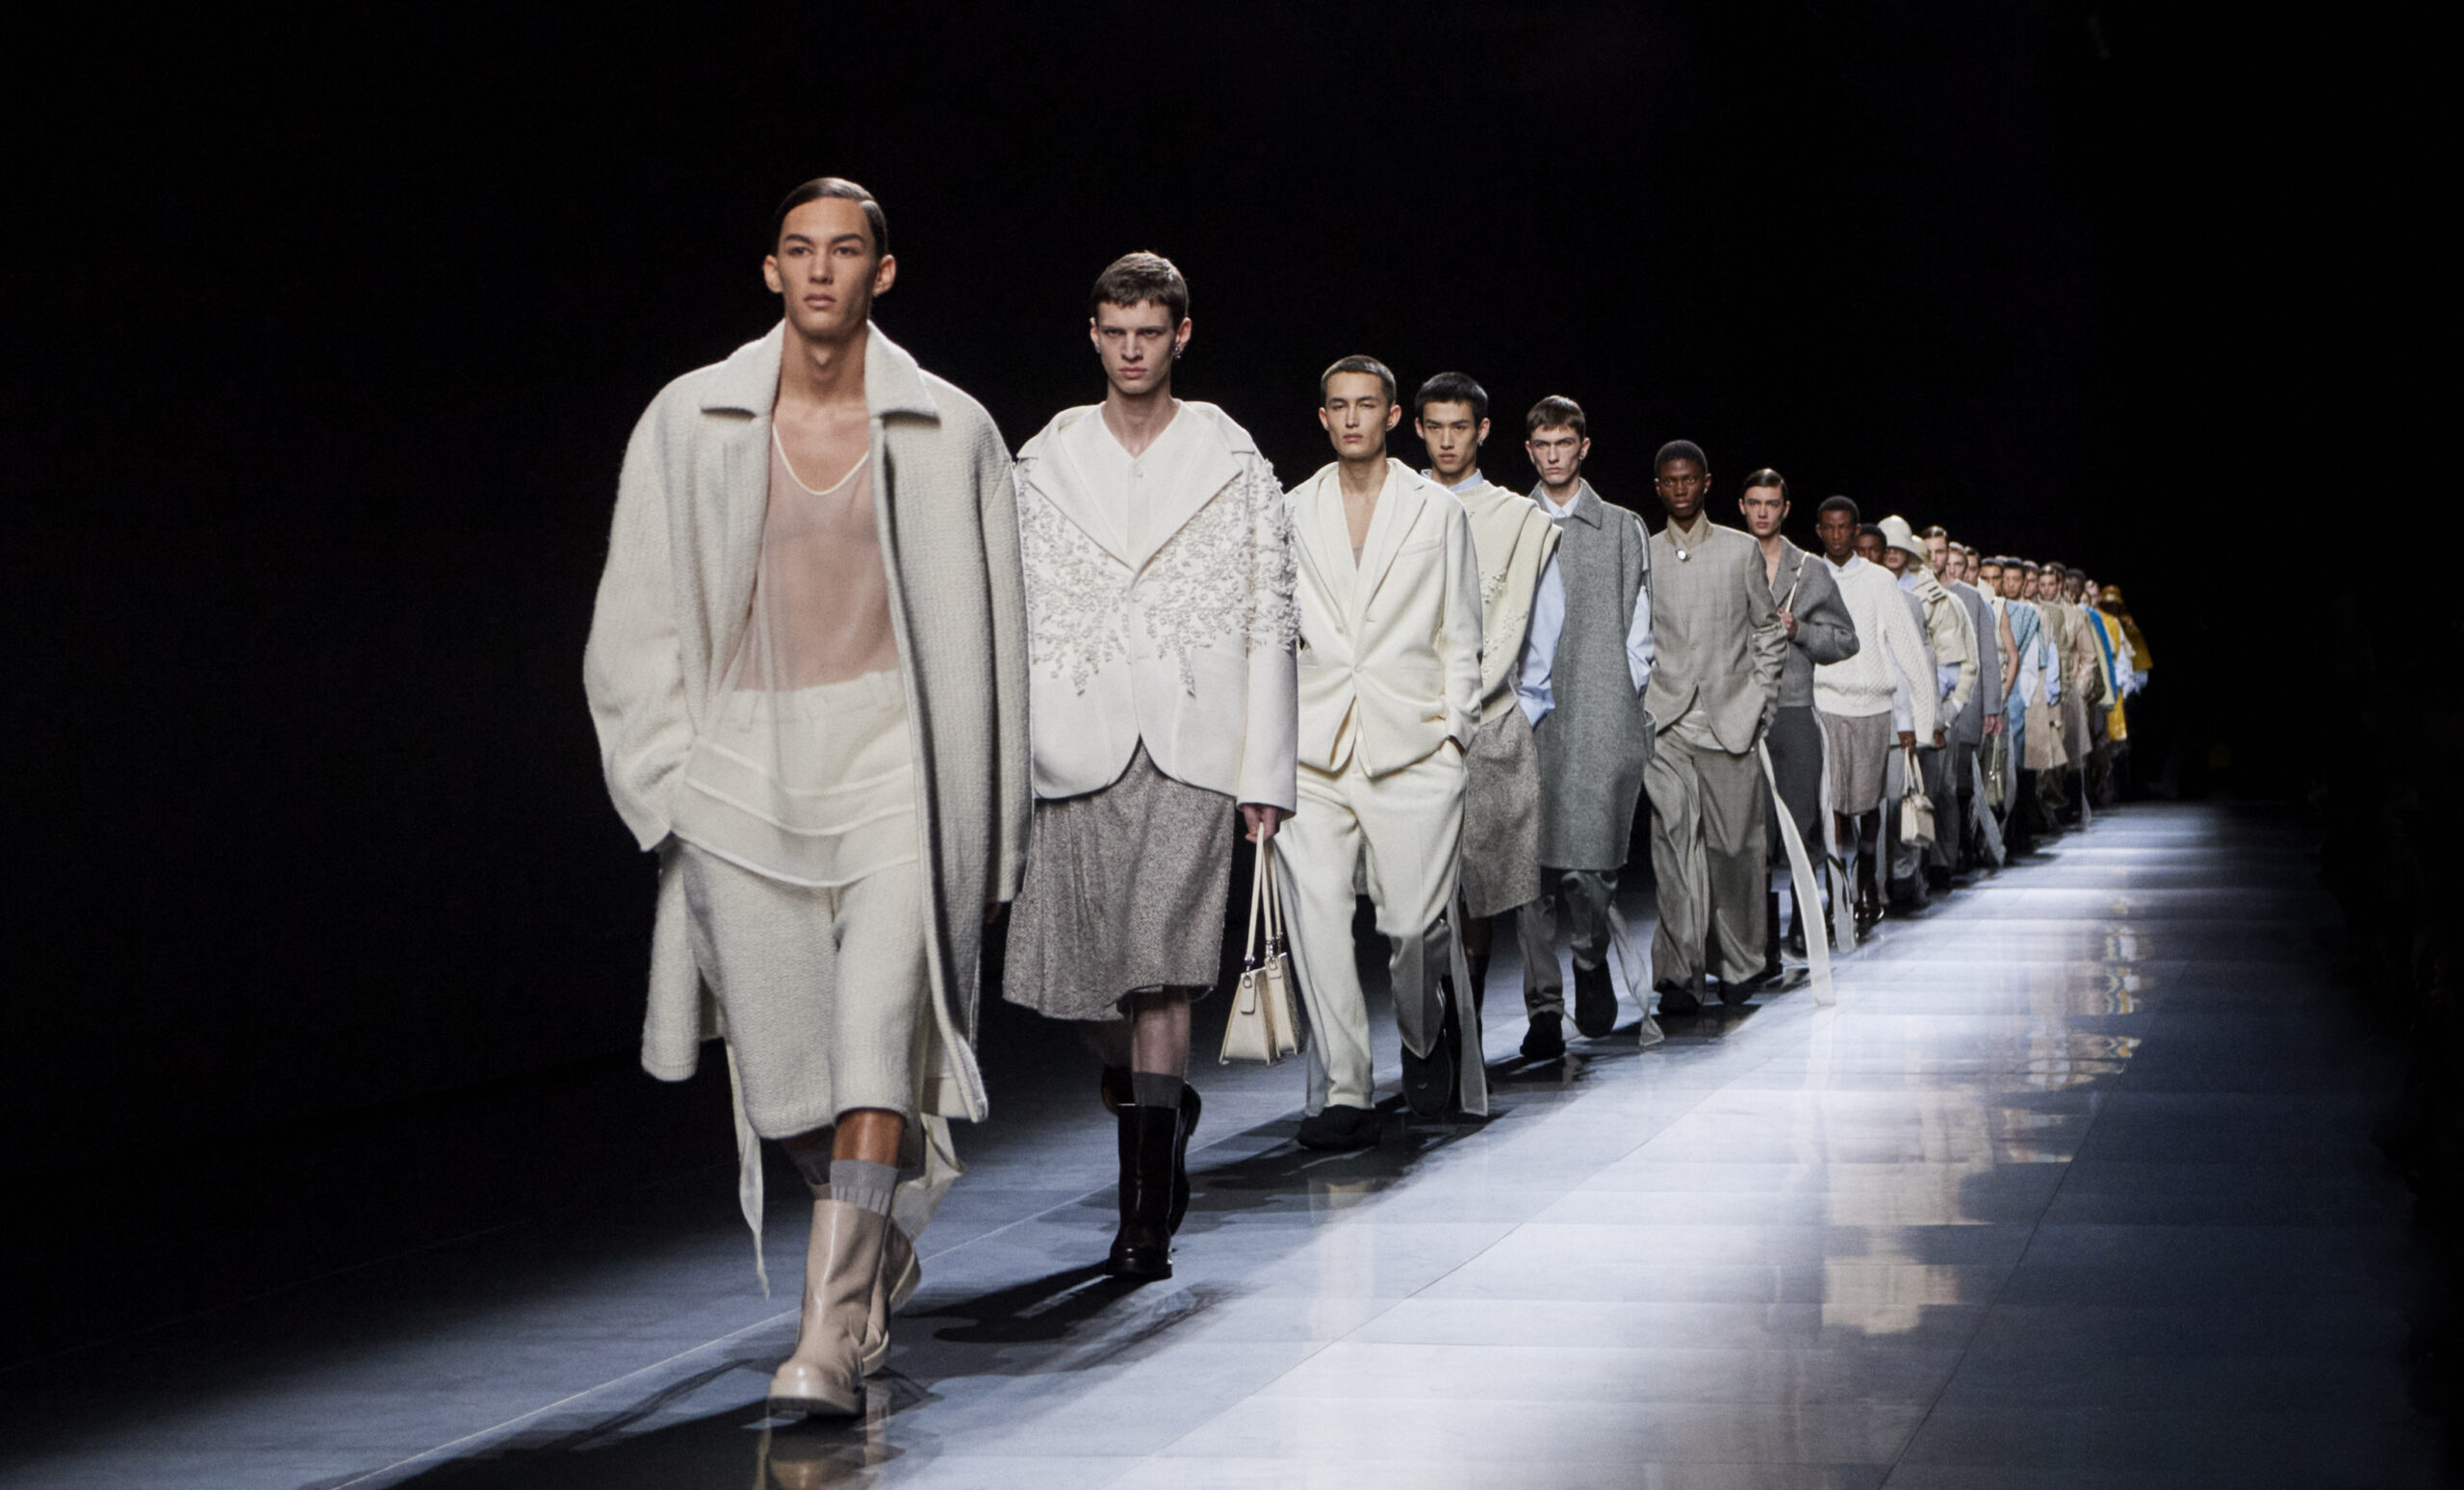 Dior Men Fall 2023 Men's Fashion Show